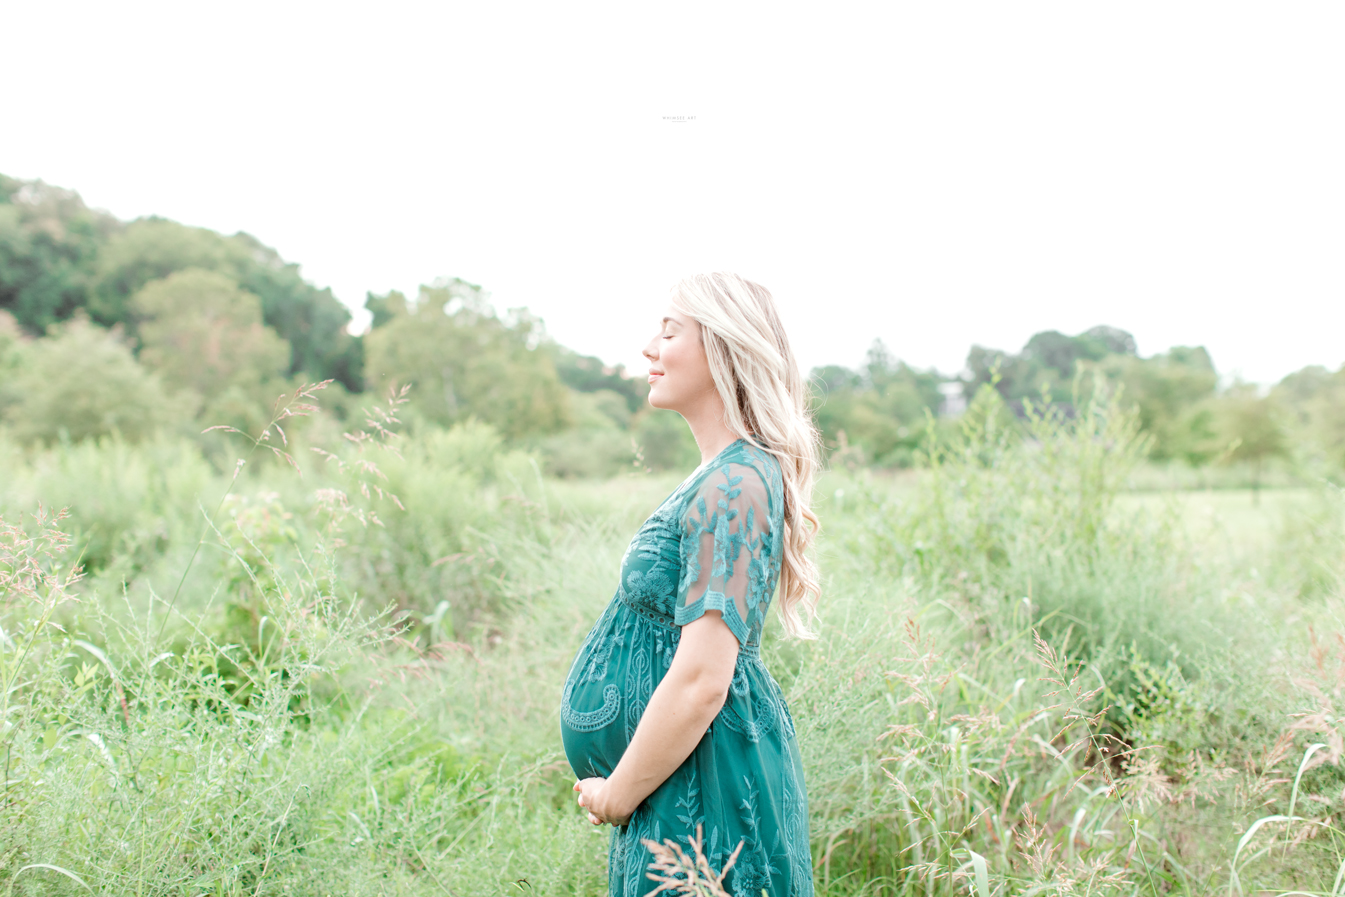 Robbins Maternity | Roanoke Maternity Photographer | Whimsee Art Photography